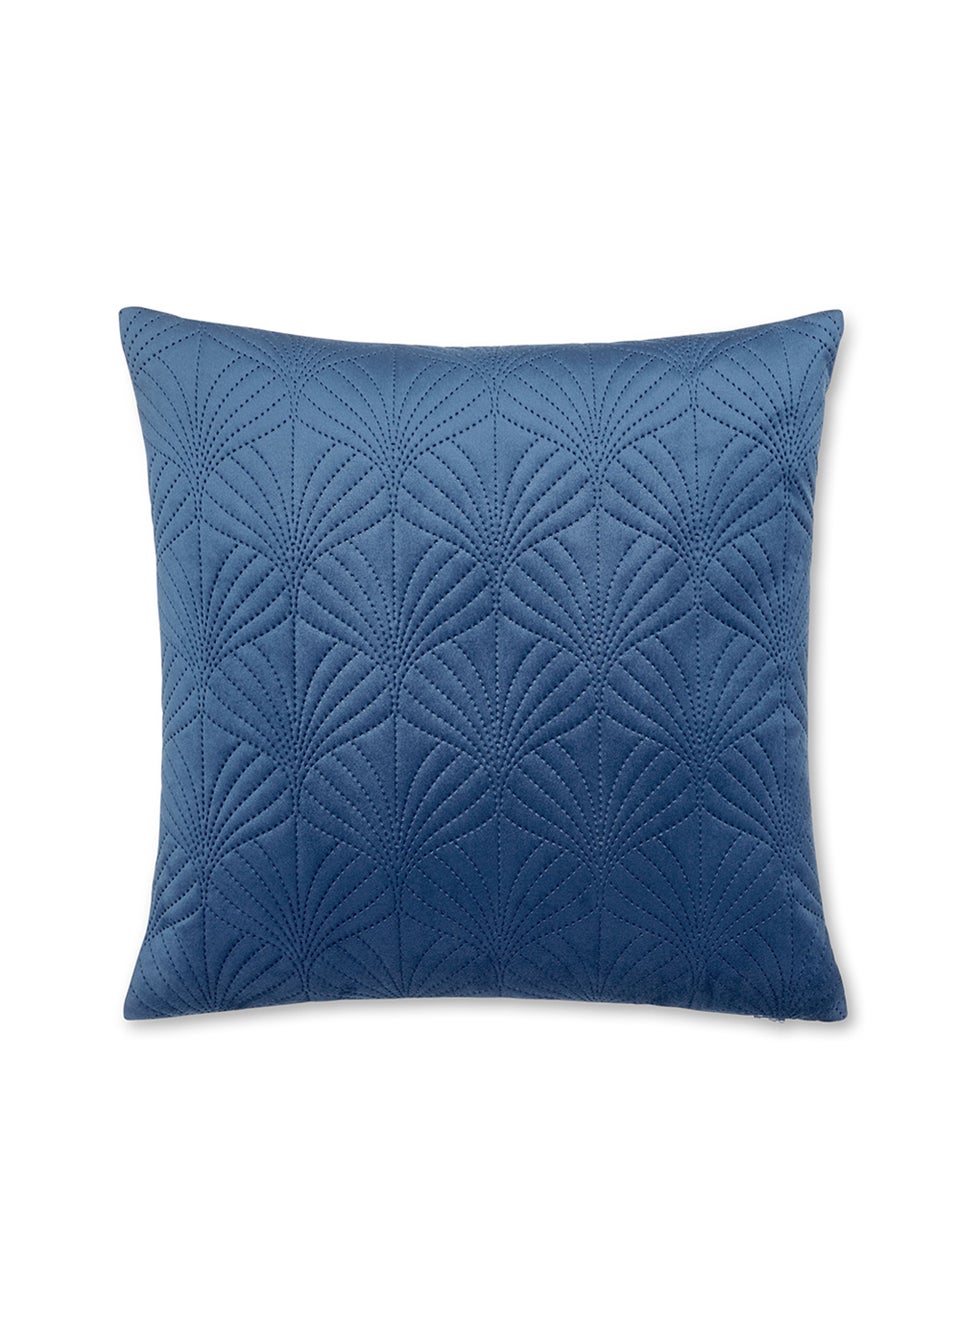 Catherine Lansfield Art Deco Pearl Cushion (45x45cm)